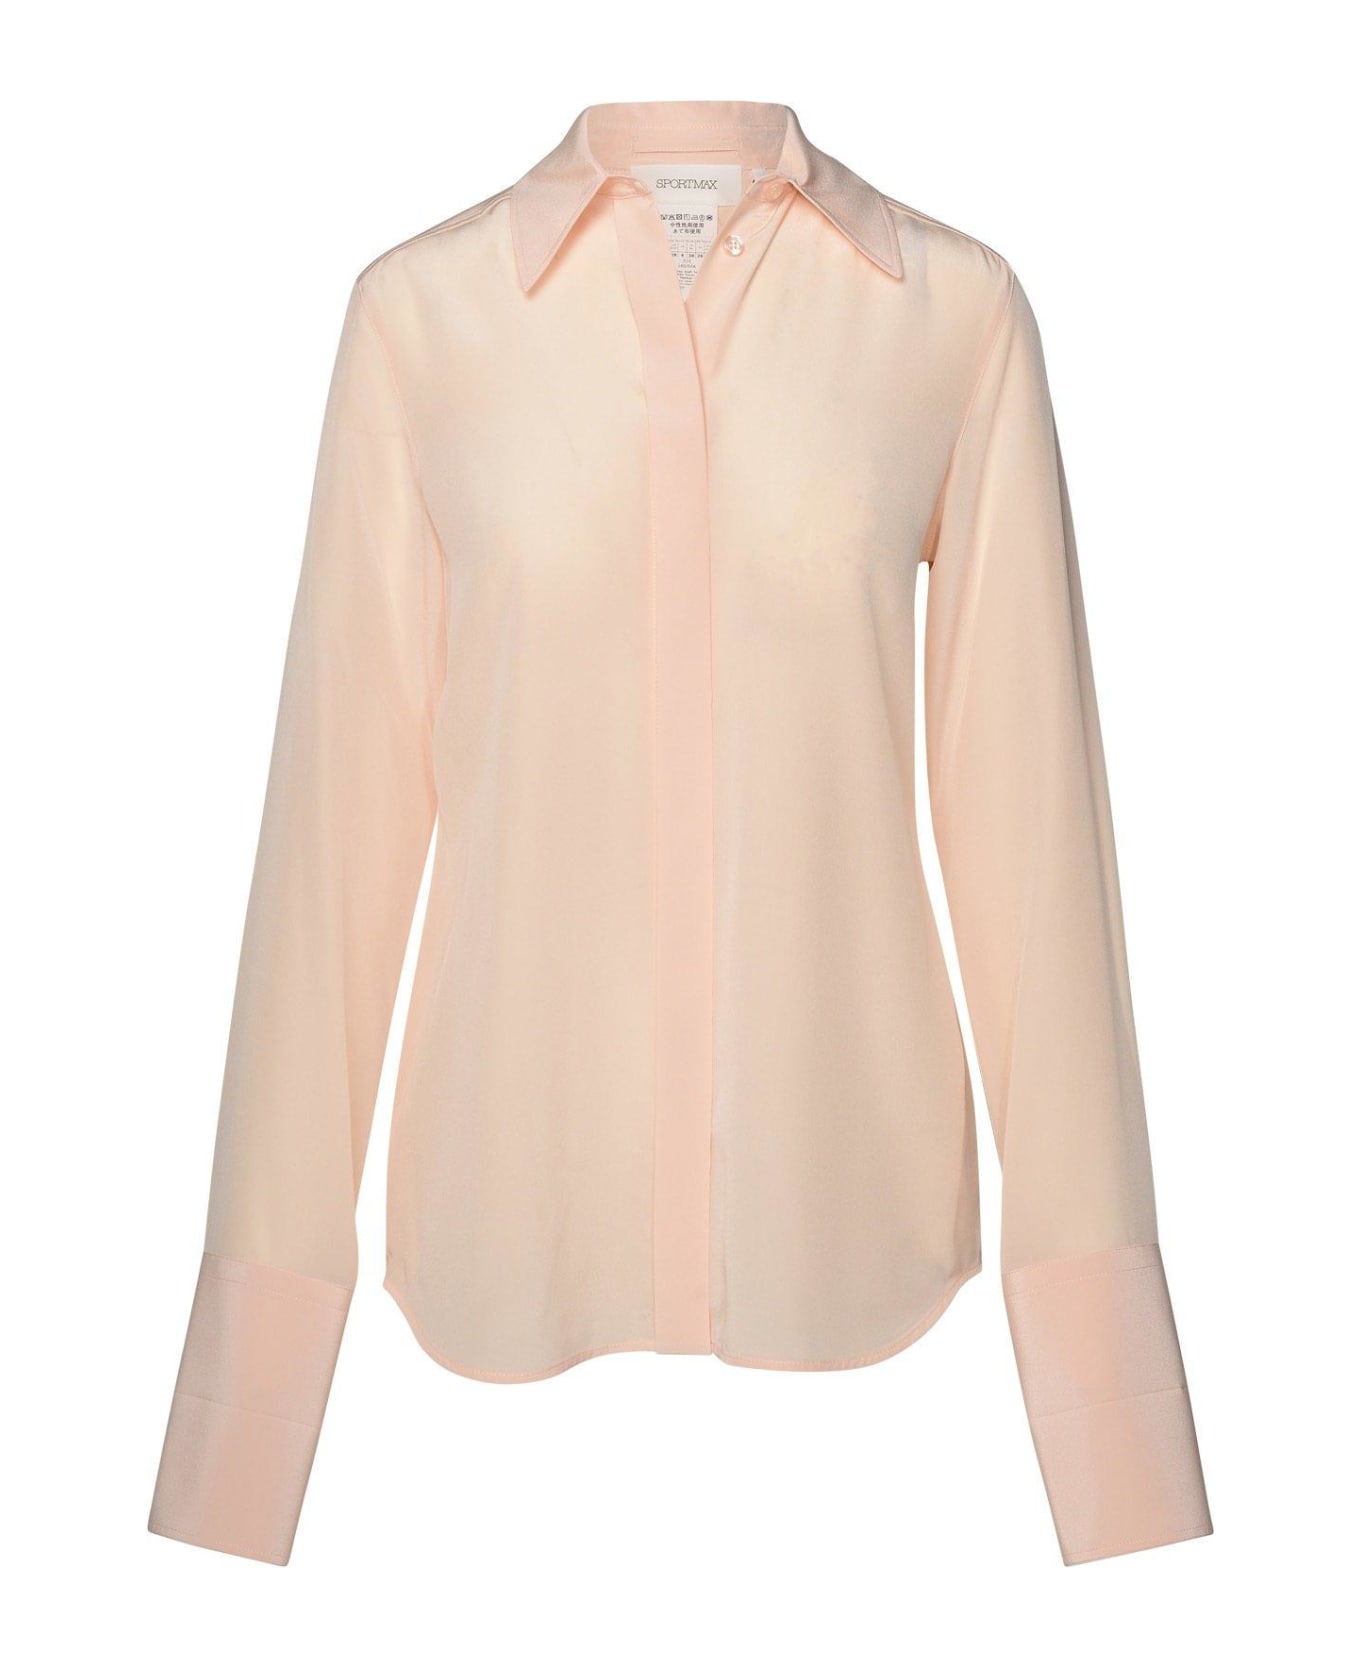 SportMax Buttoned Long-sleeved Shirt - Pink シャツ